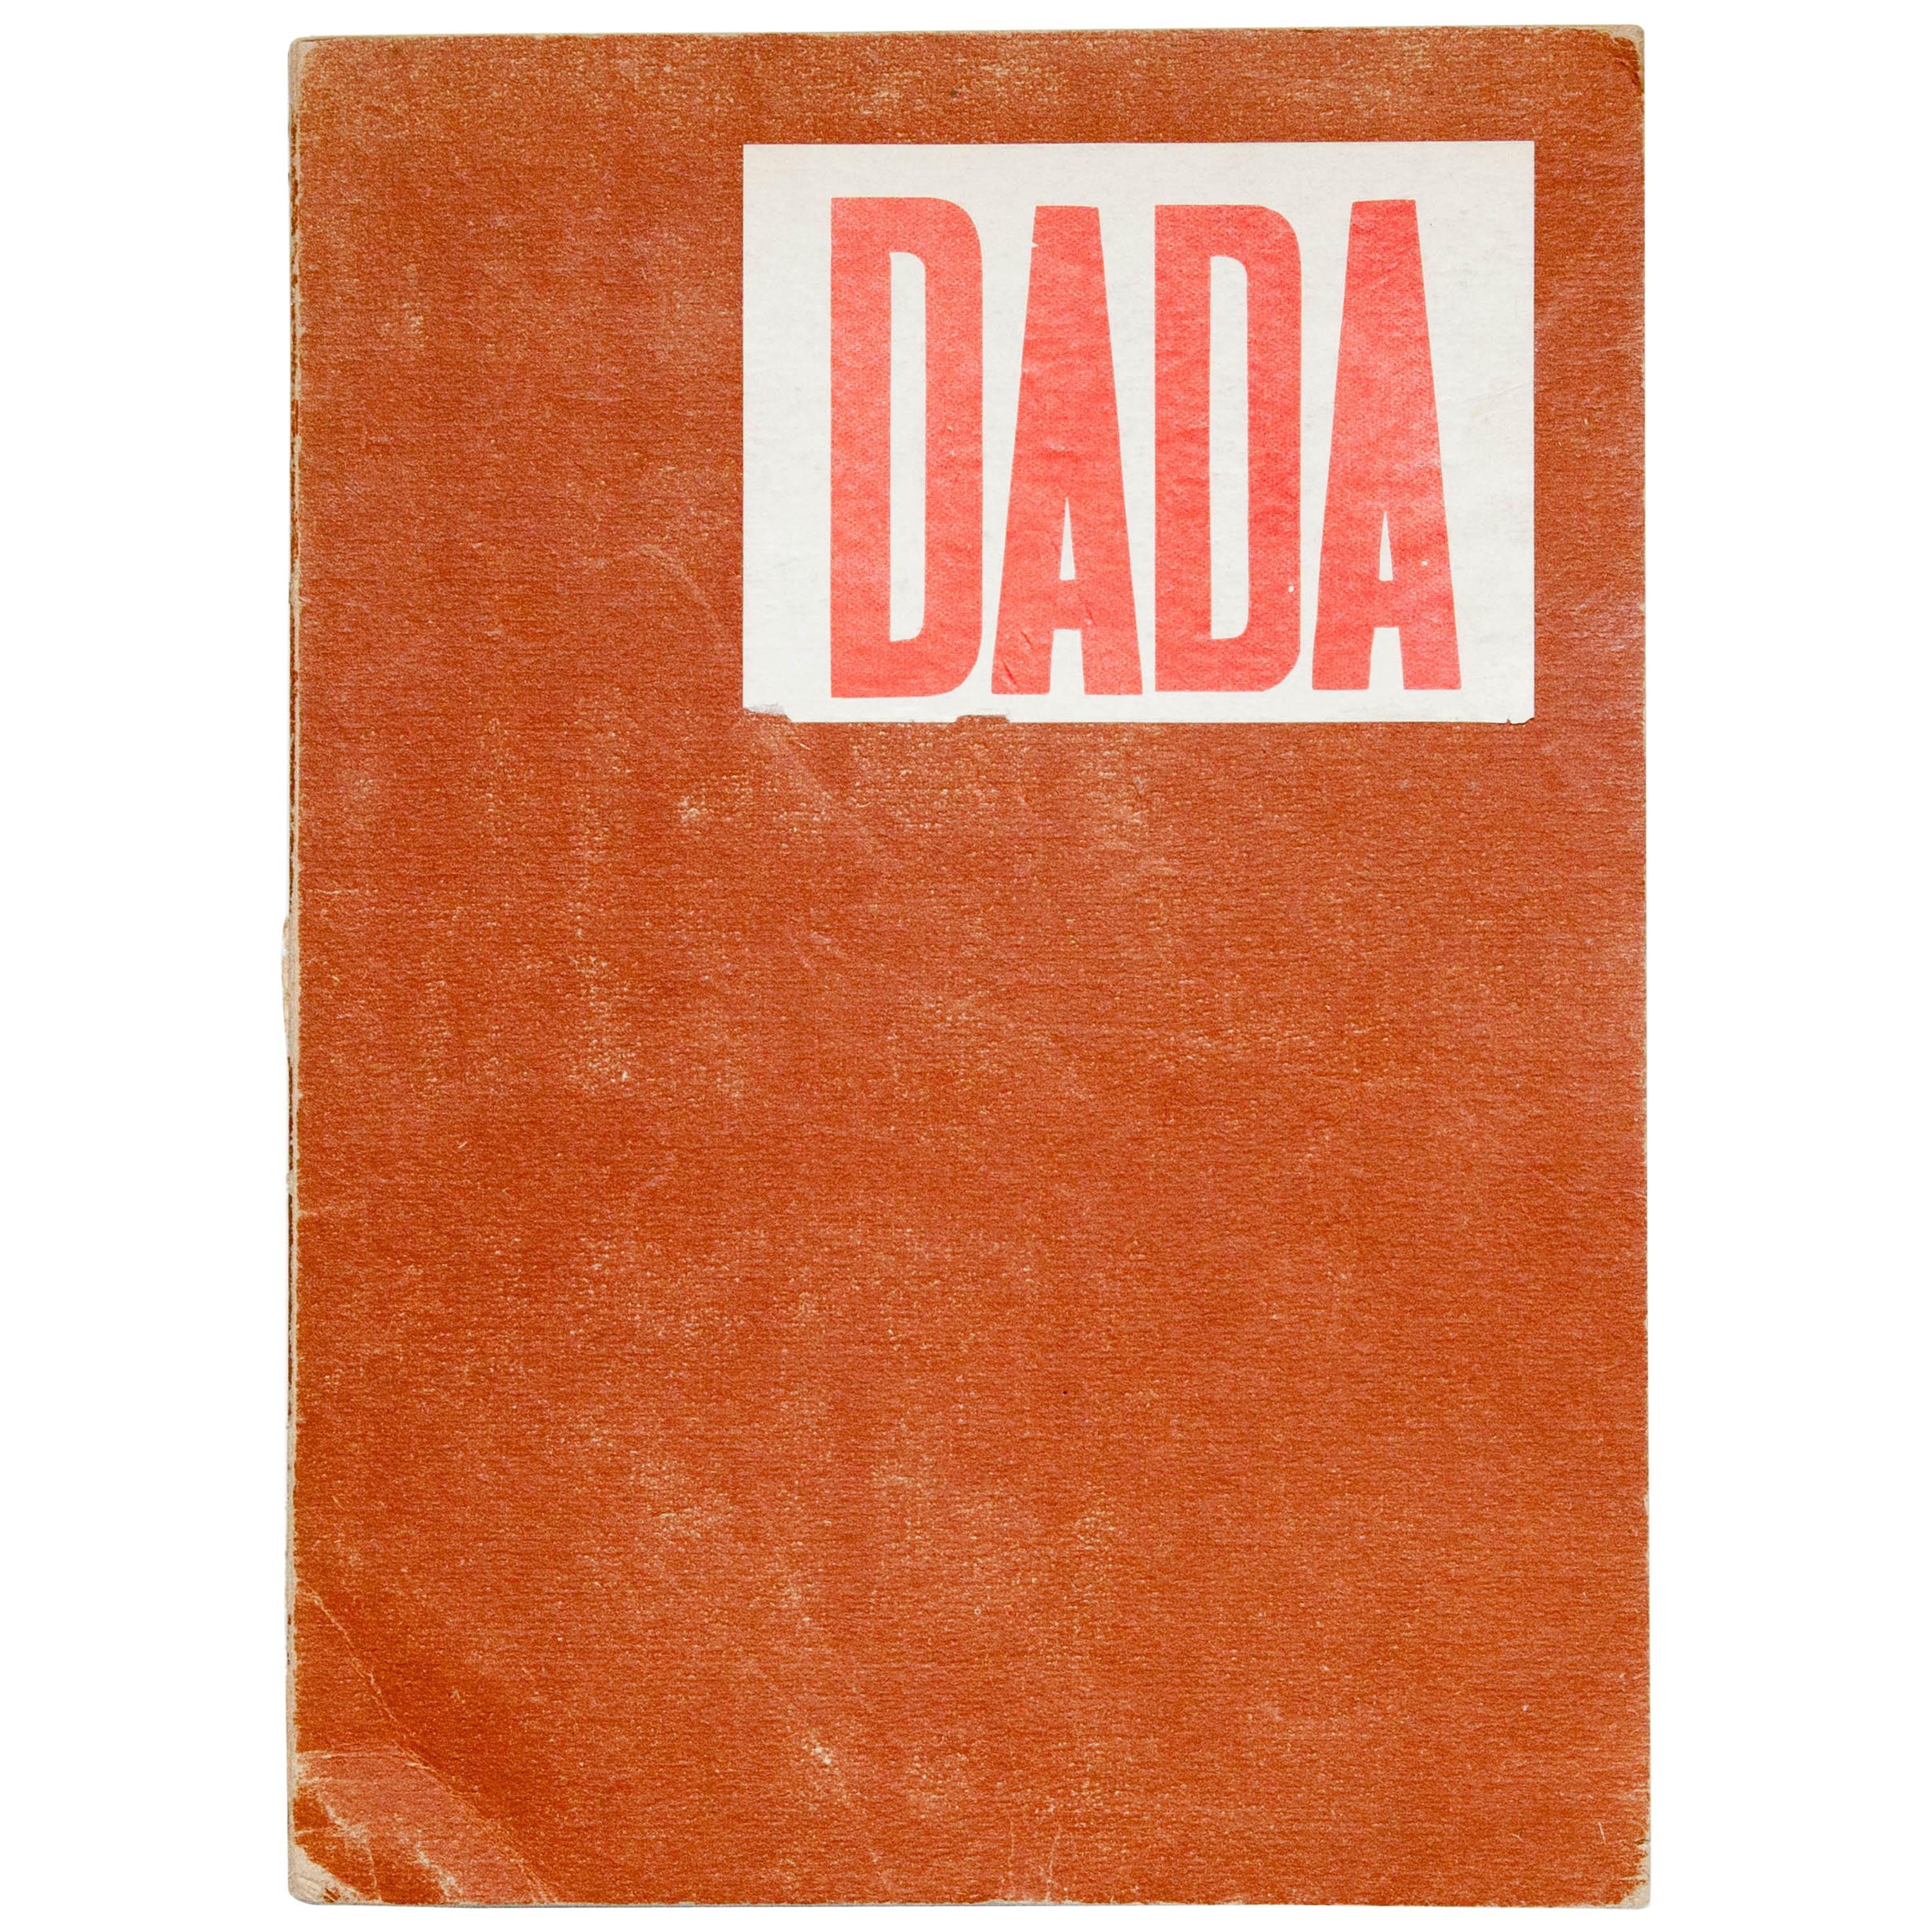 "DADA: Documenting a Movement" 1958 Publication